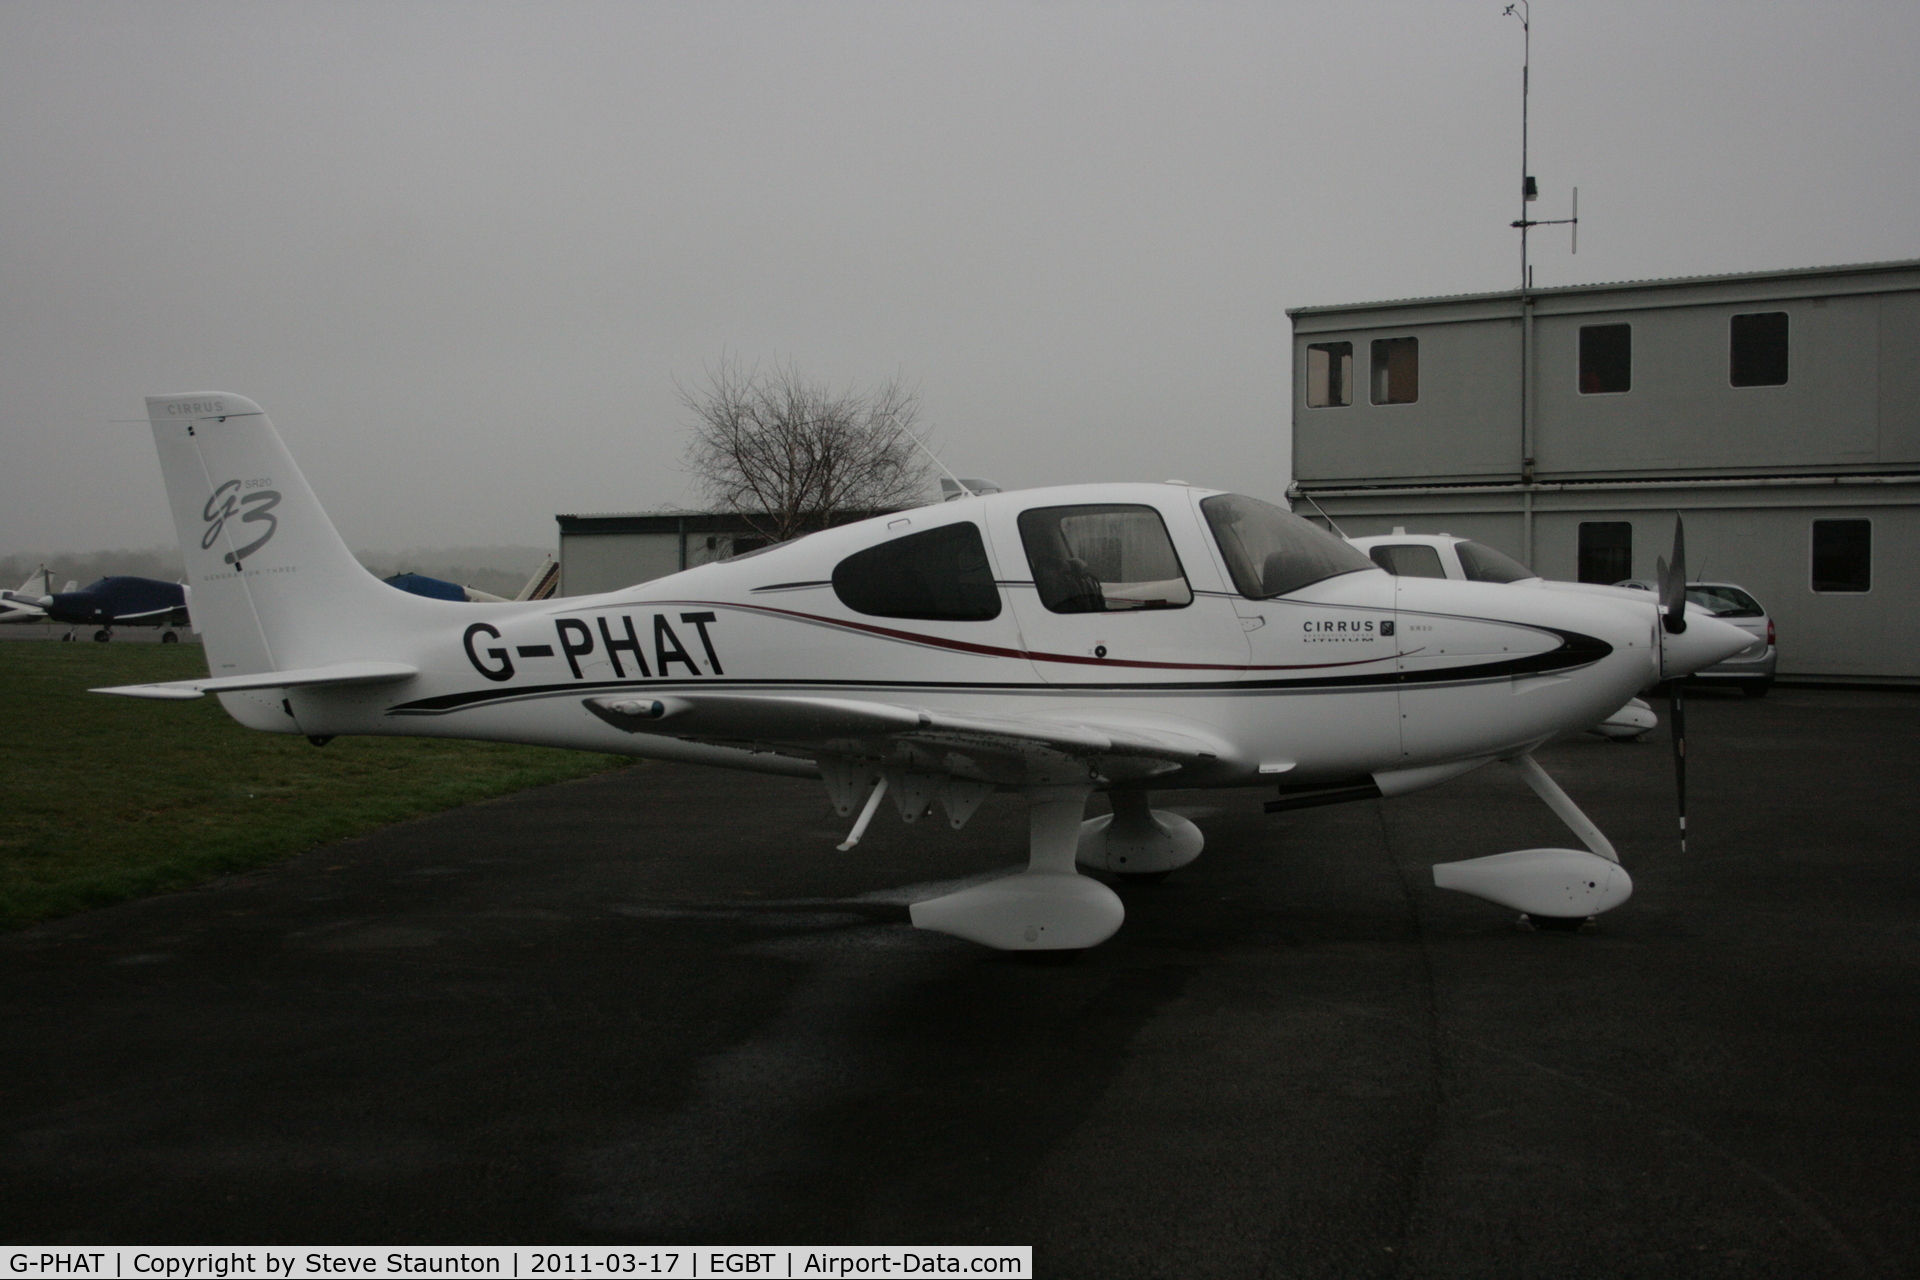 G-PHAT, 2008 Cirrus SR20 G3 C/N 1999, Taken at Turweston Airfield March 2010